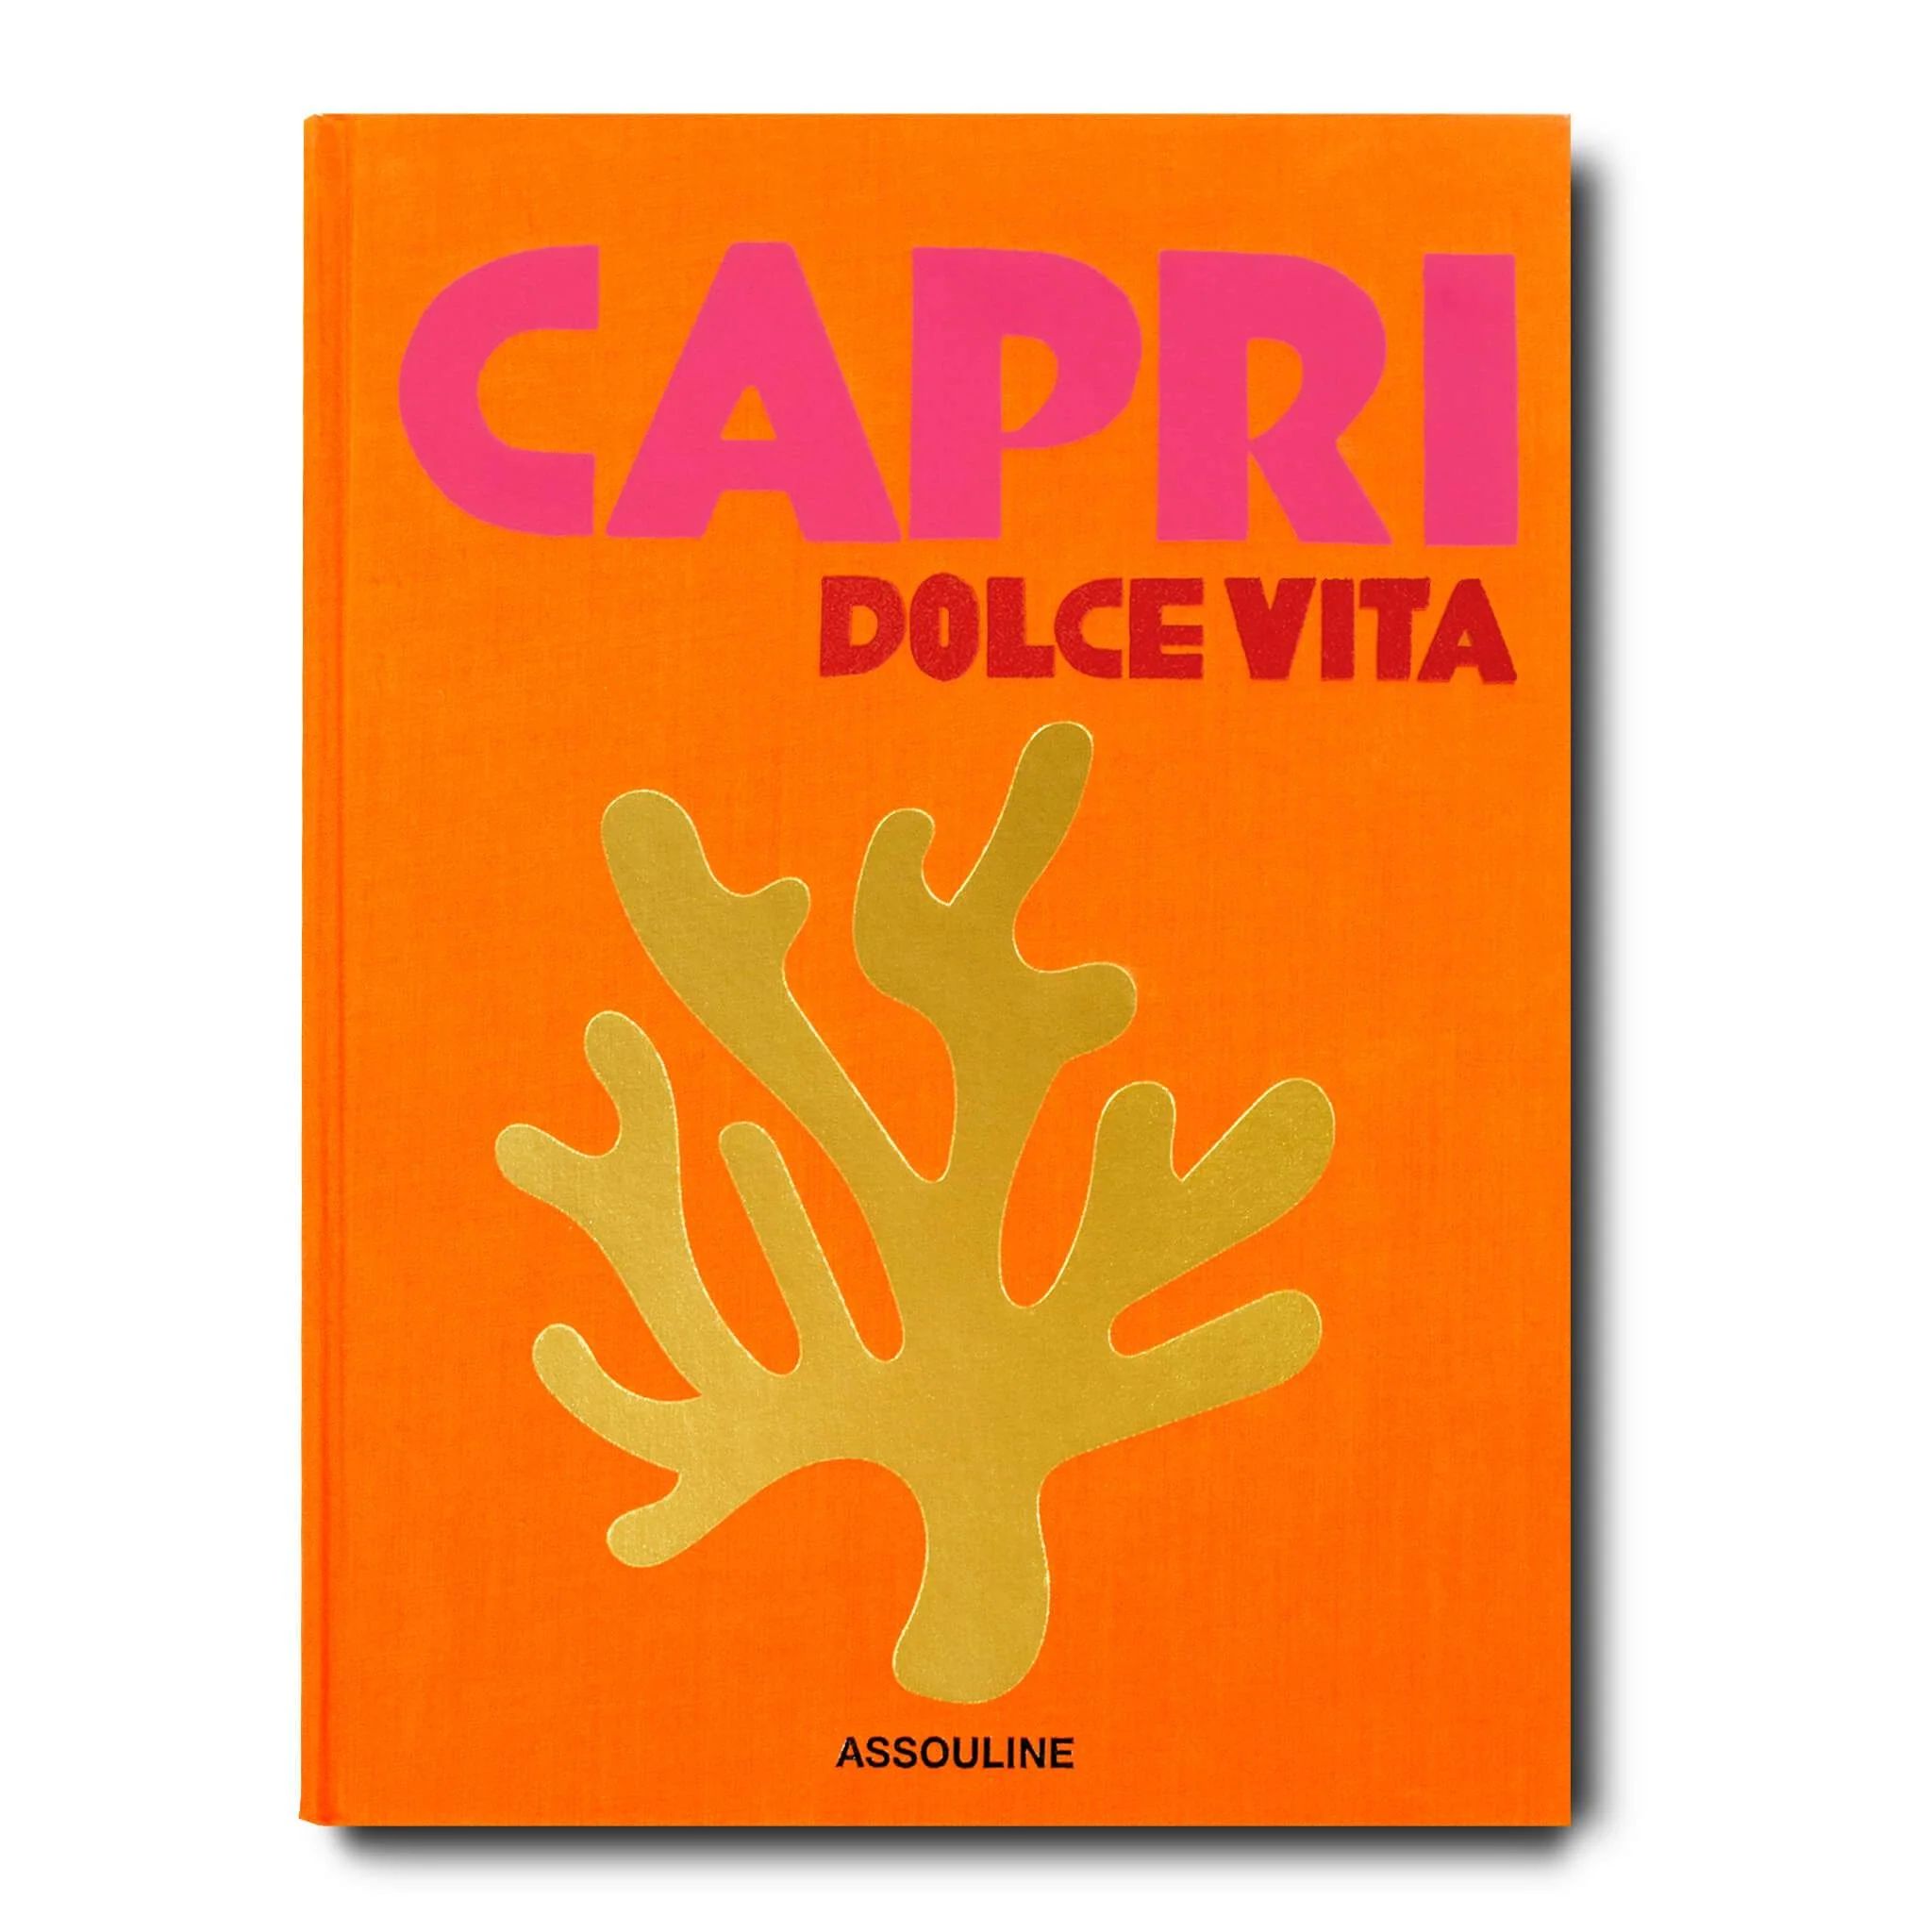 Capri Dolce Vita by Cesare Cunaccia - Coffee Table Book | ASSOULINE | Assouline